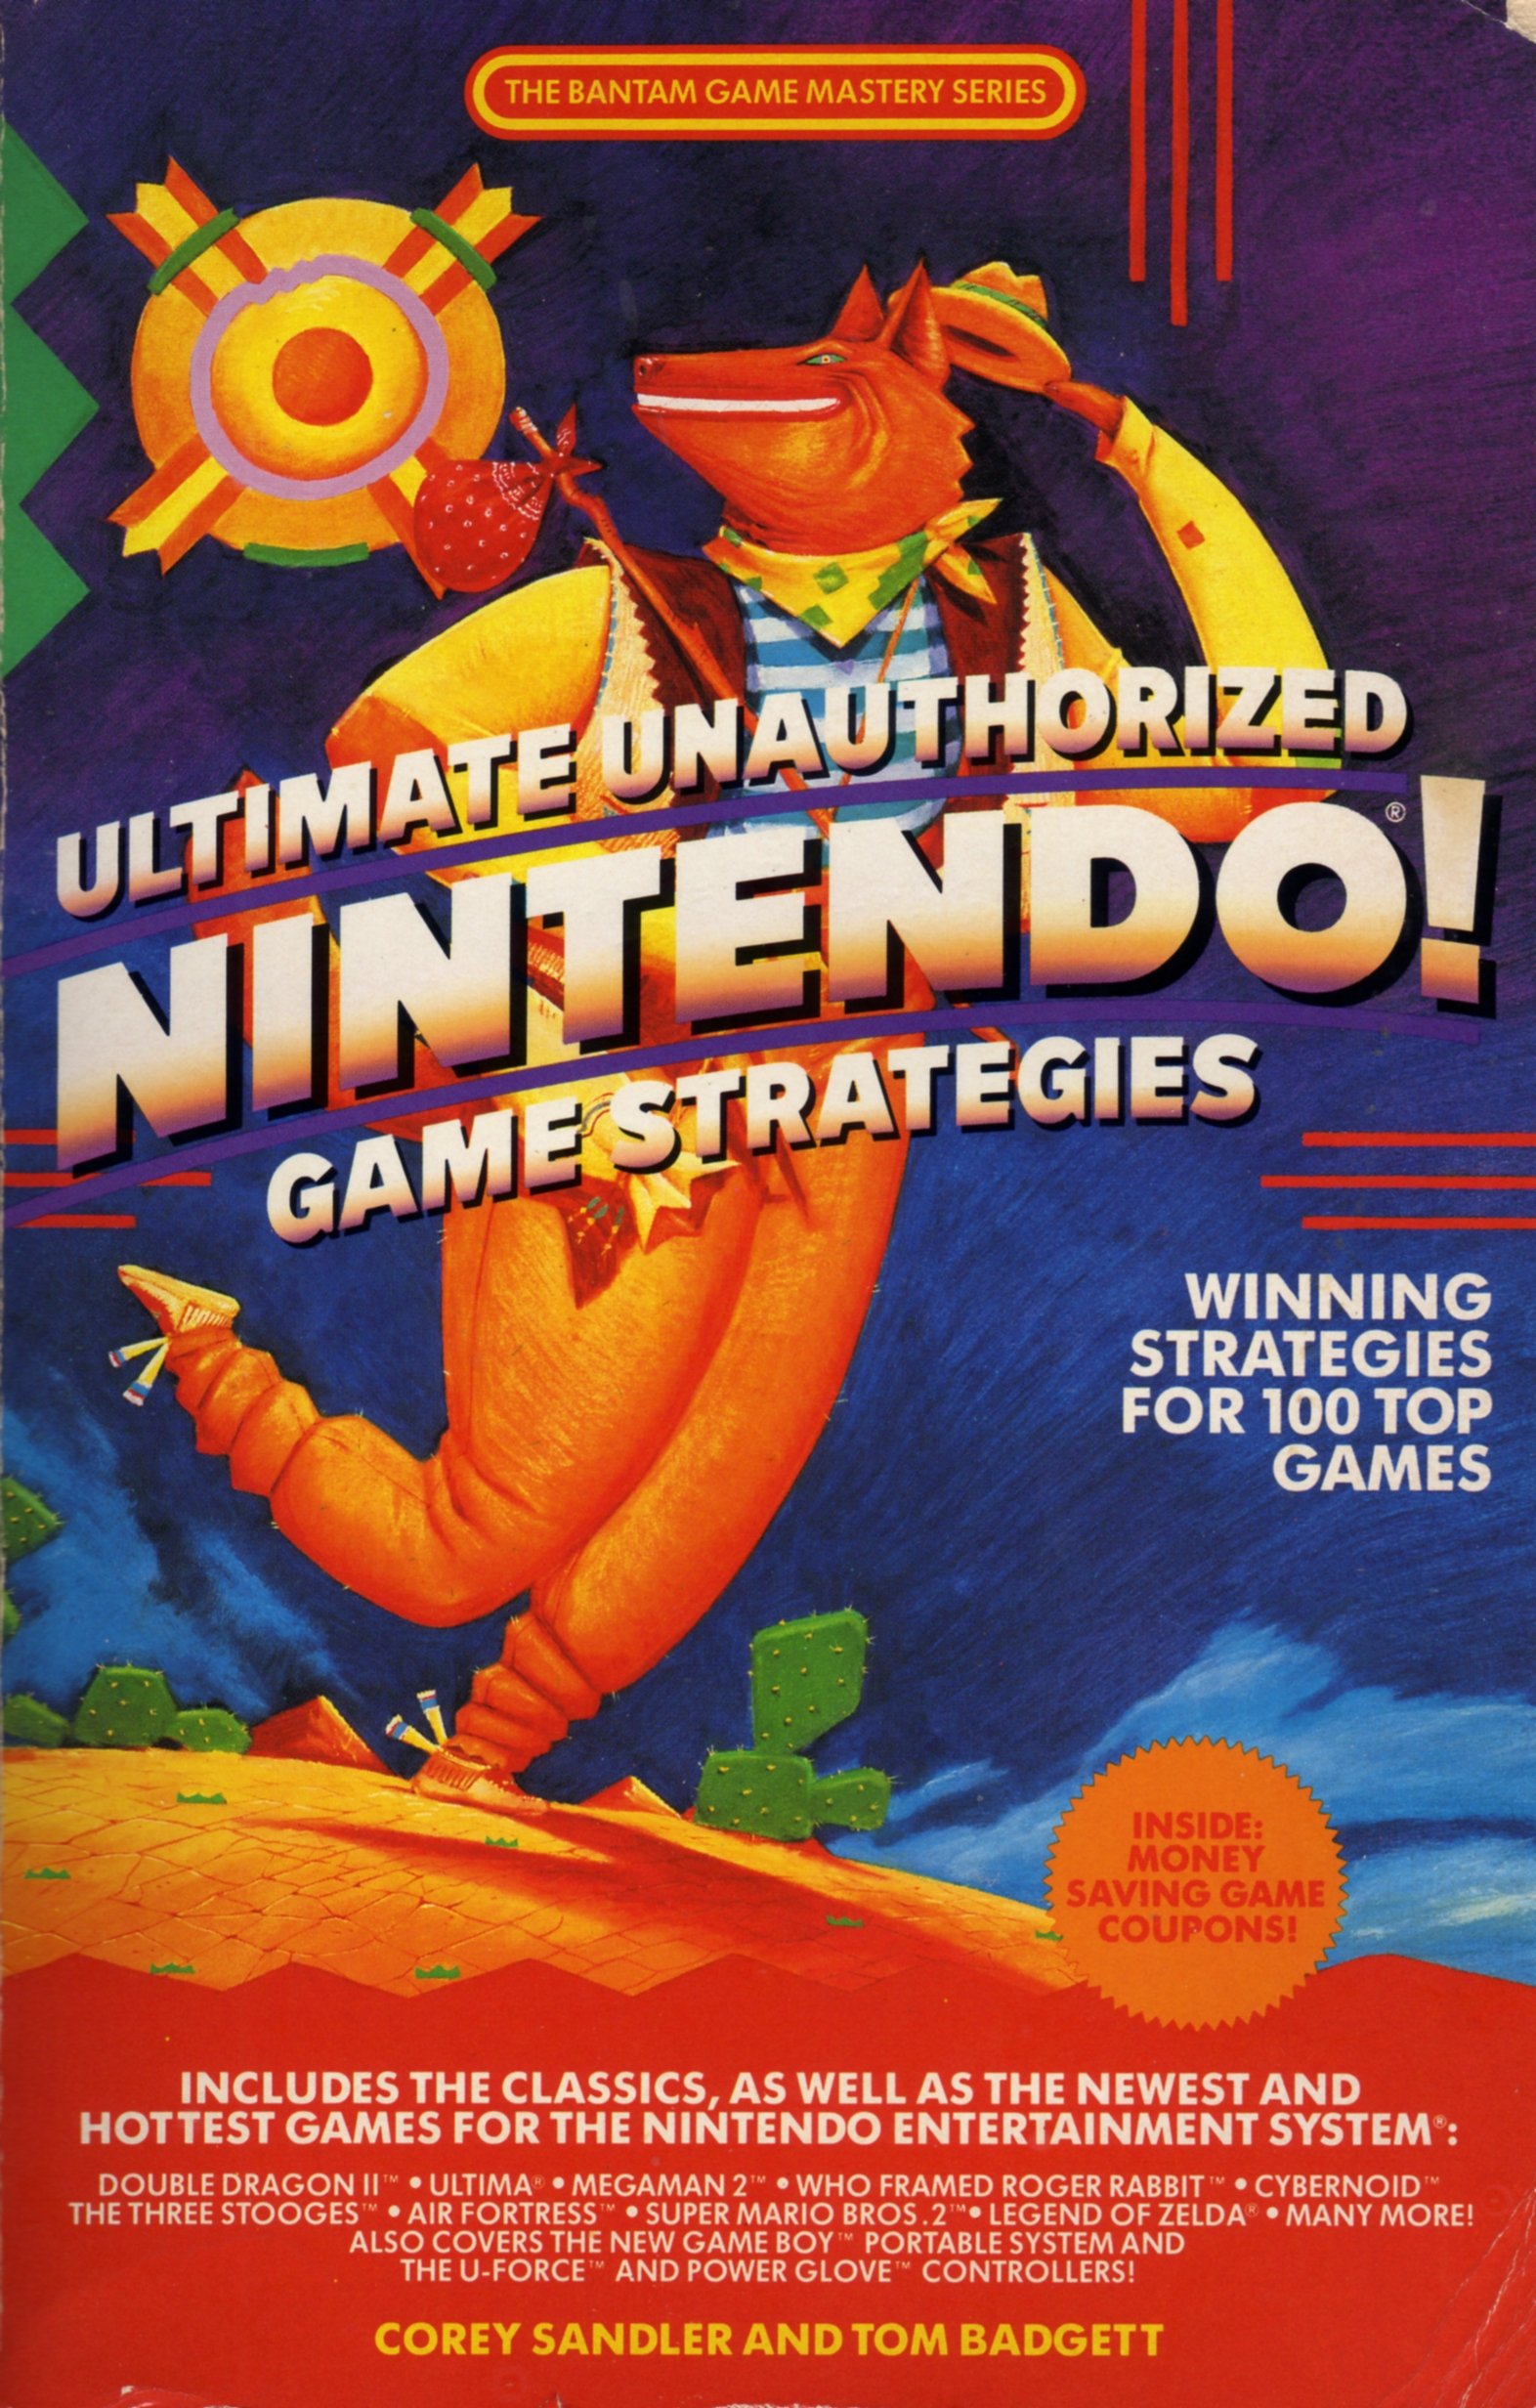 Ultimate Unauthorized Nintendo Game Strategies